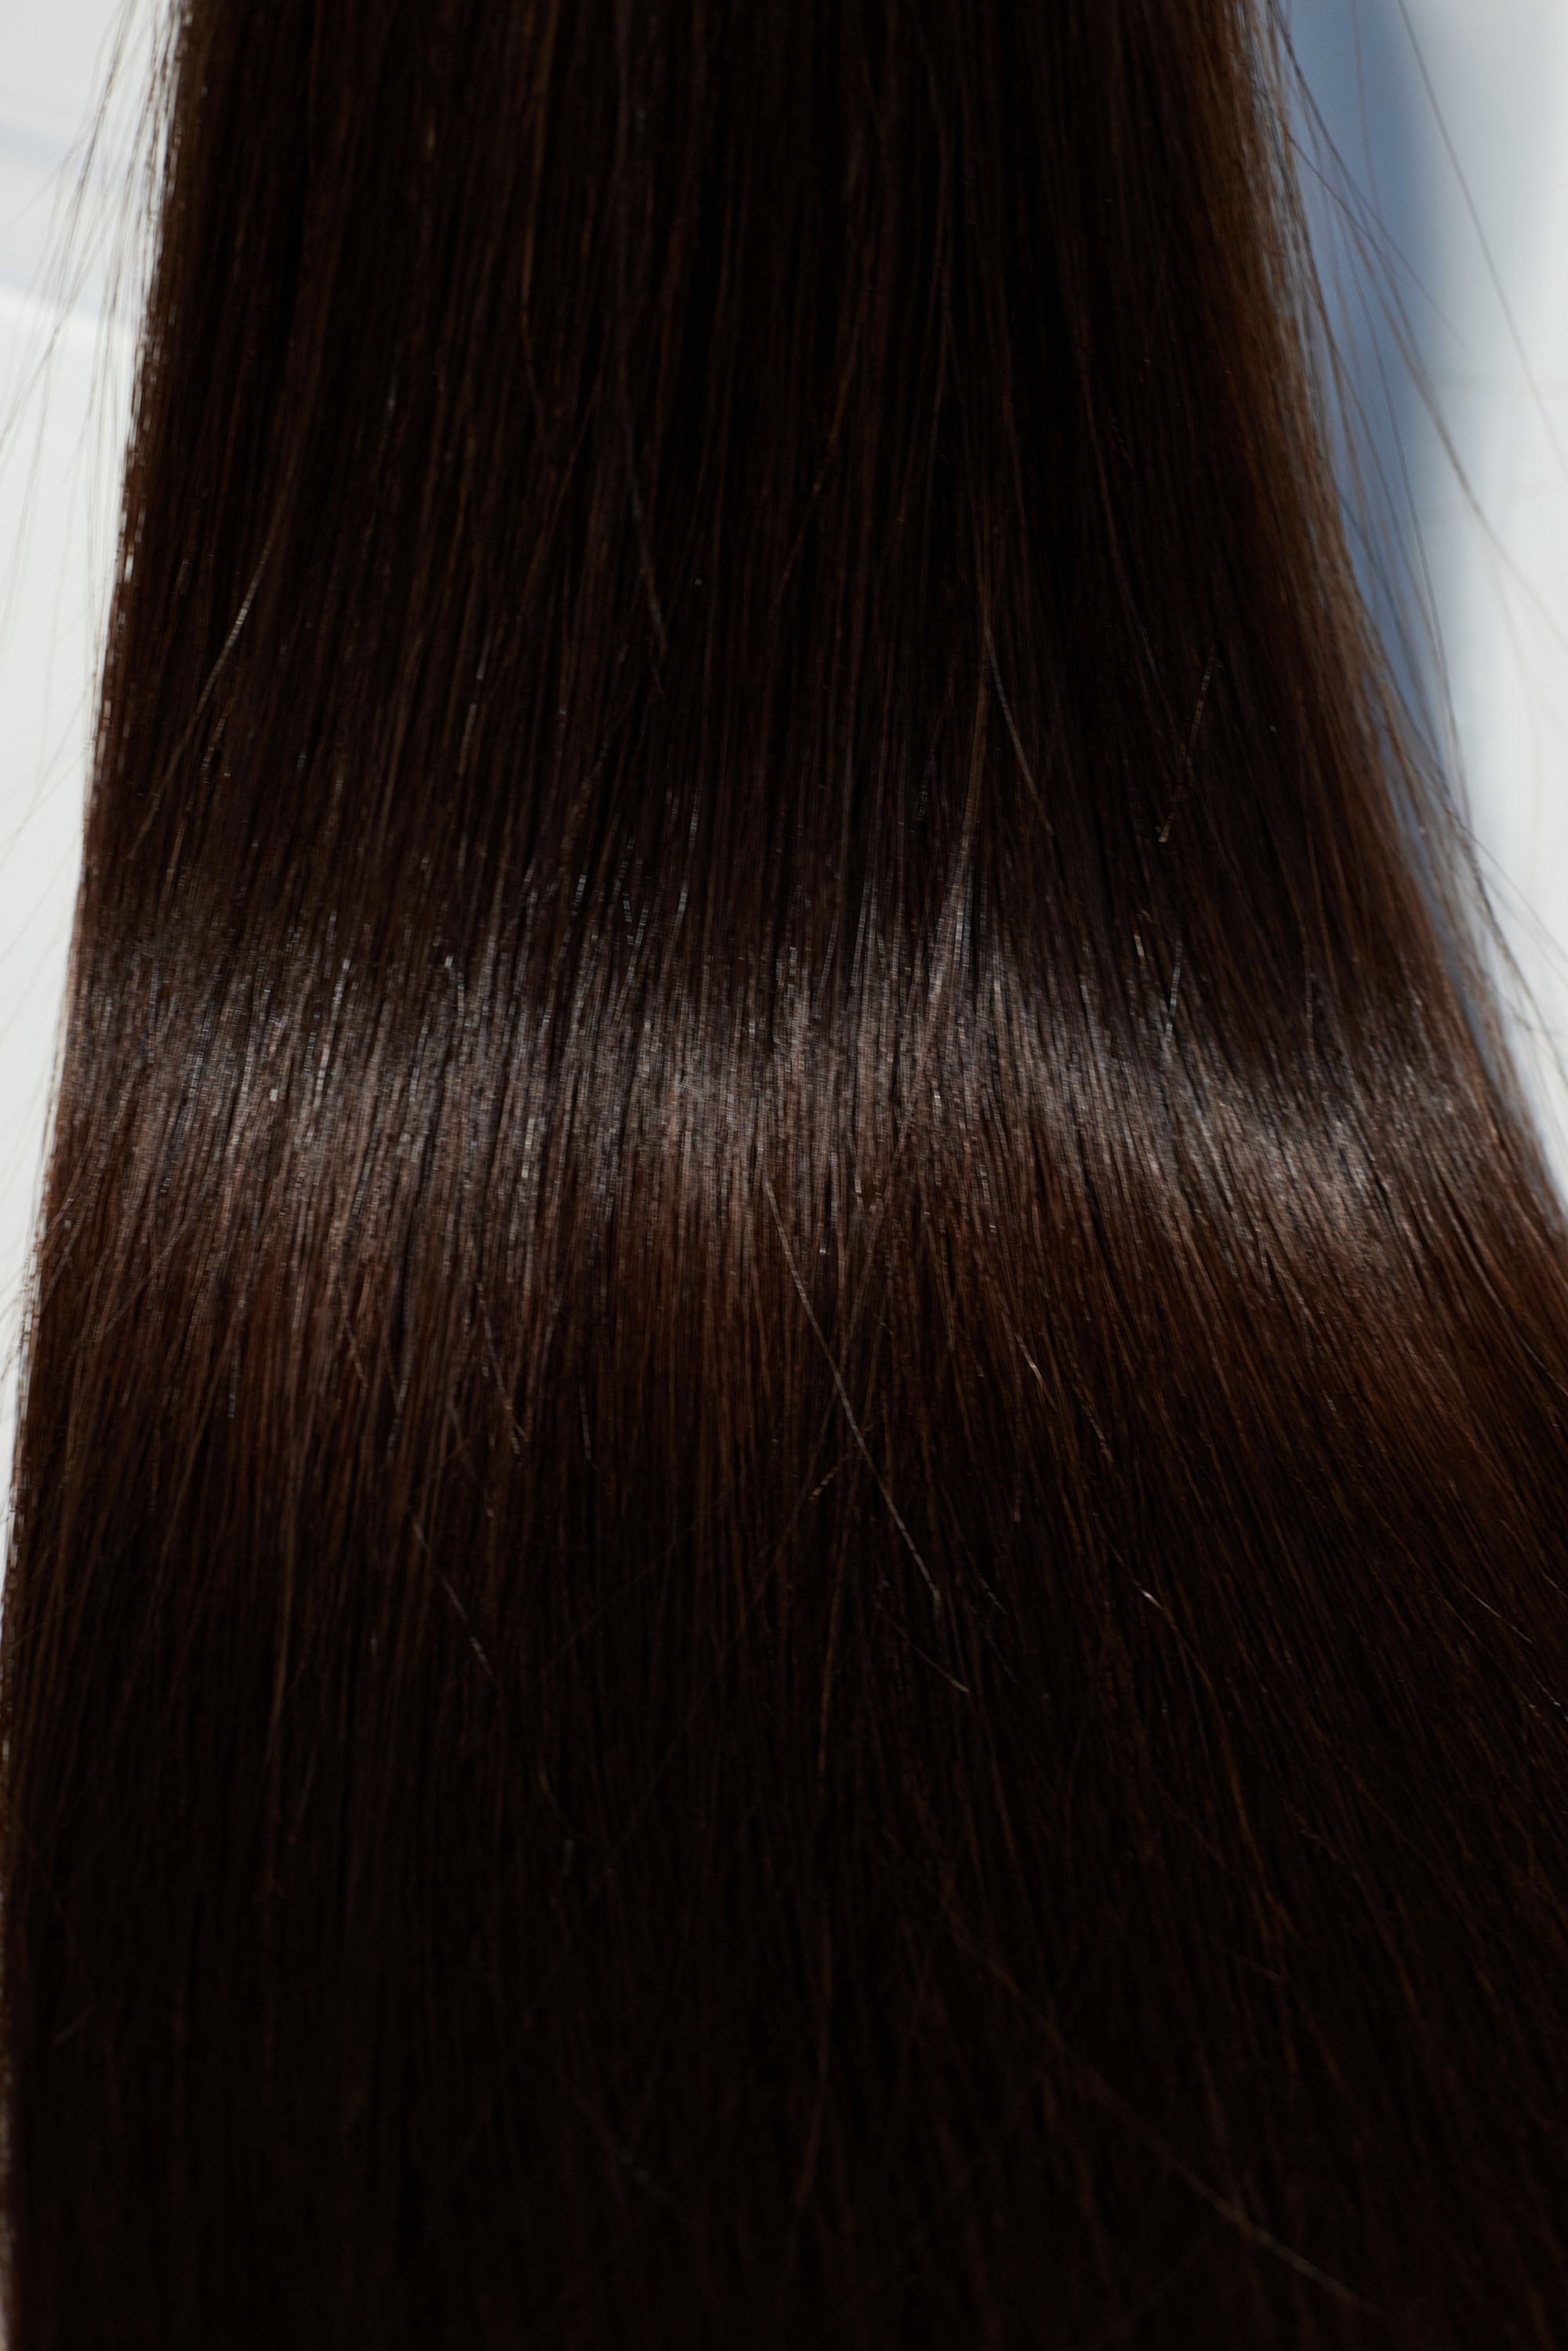 Behair professional Keratin Tip "Premium" 16" (40cm) Natural Straight Dark Coffee Brown #2 - 25g (Standart - 0.7g each pcs) hair extensions